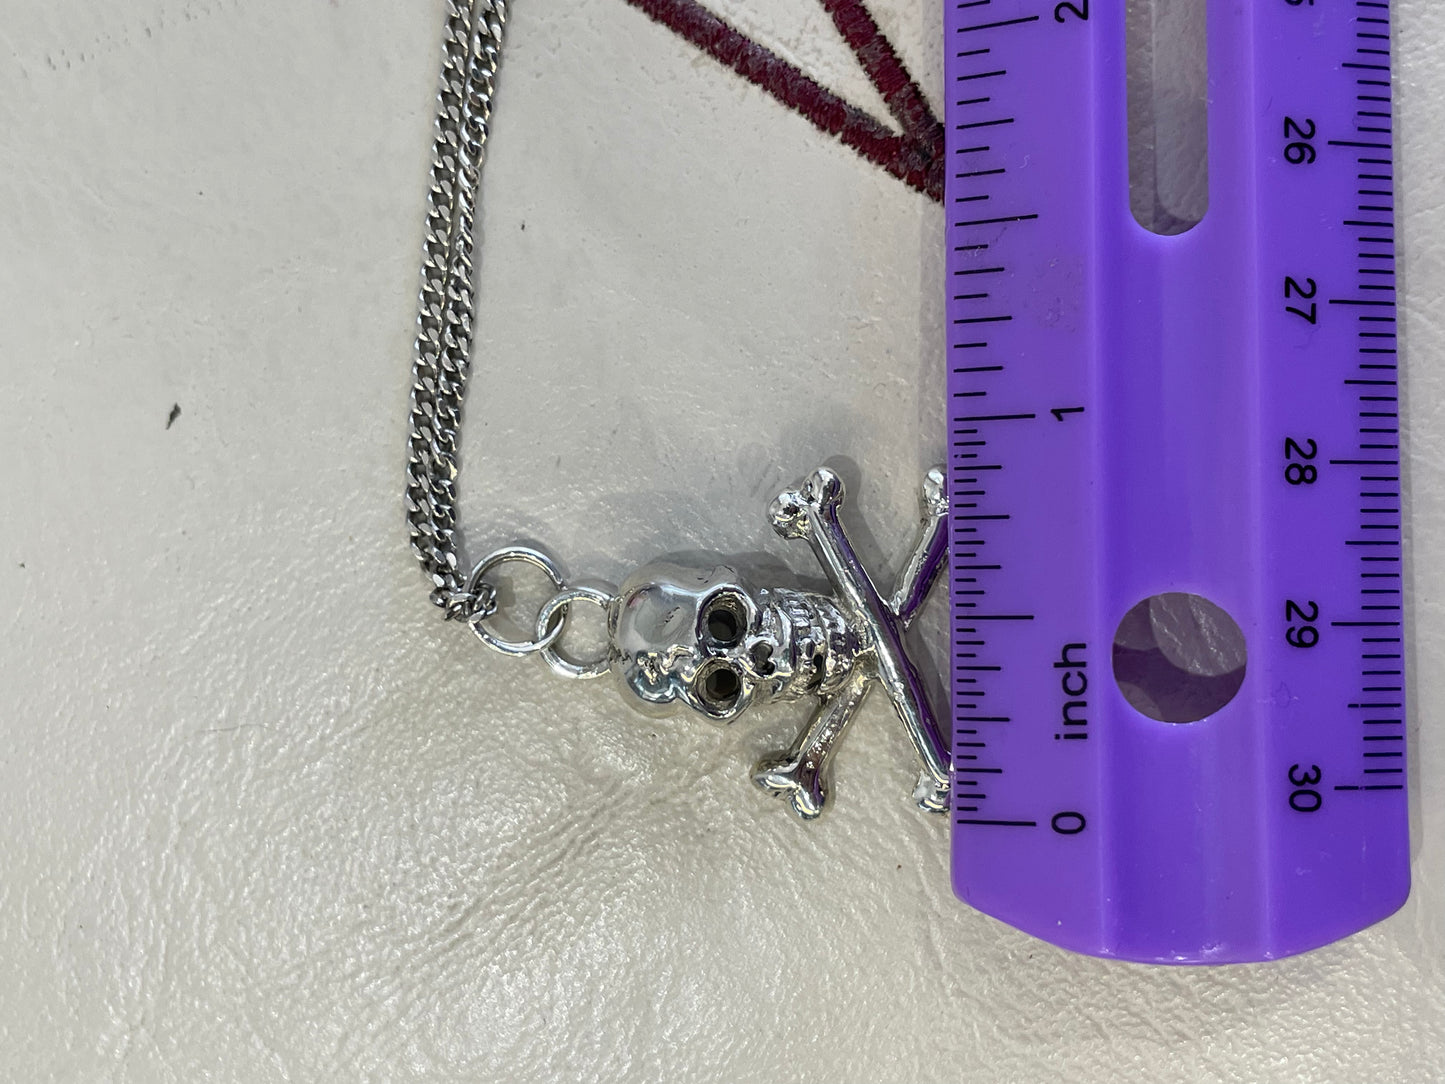 925 Sterling Silver Skull & Crossbones Pirate Symbol Necklace 24”